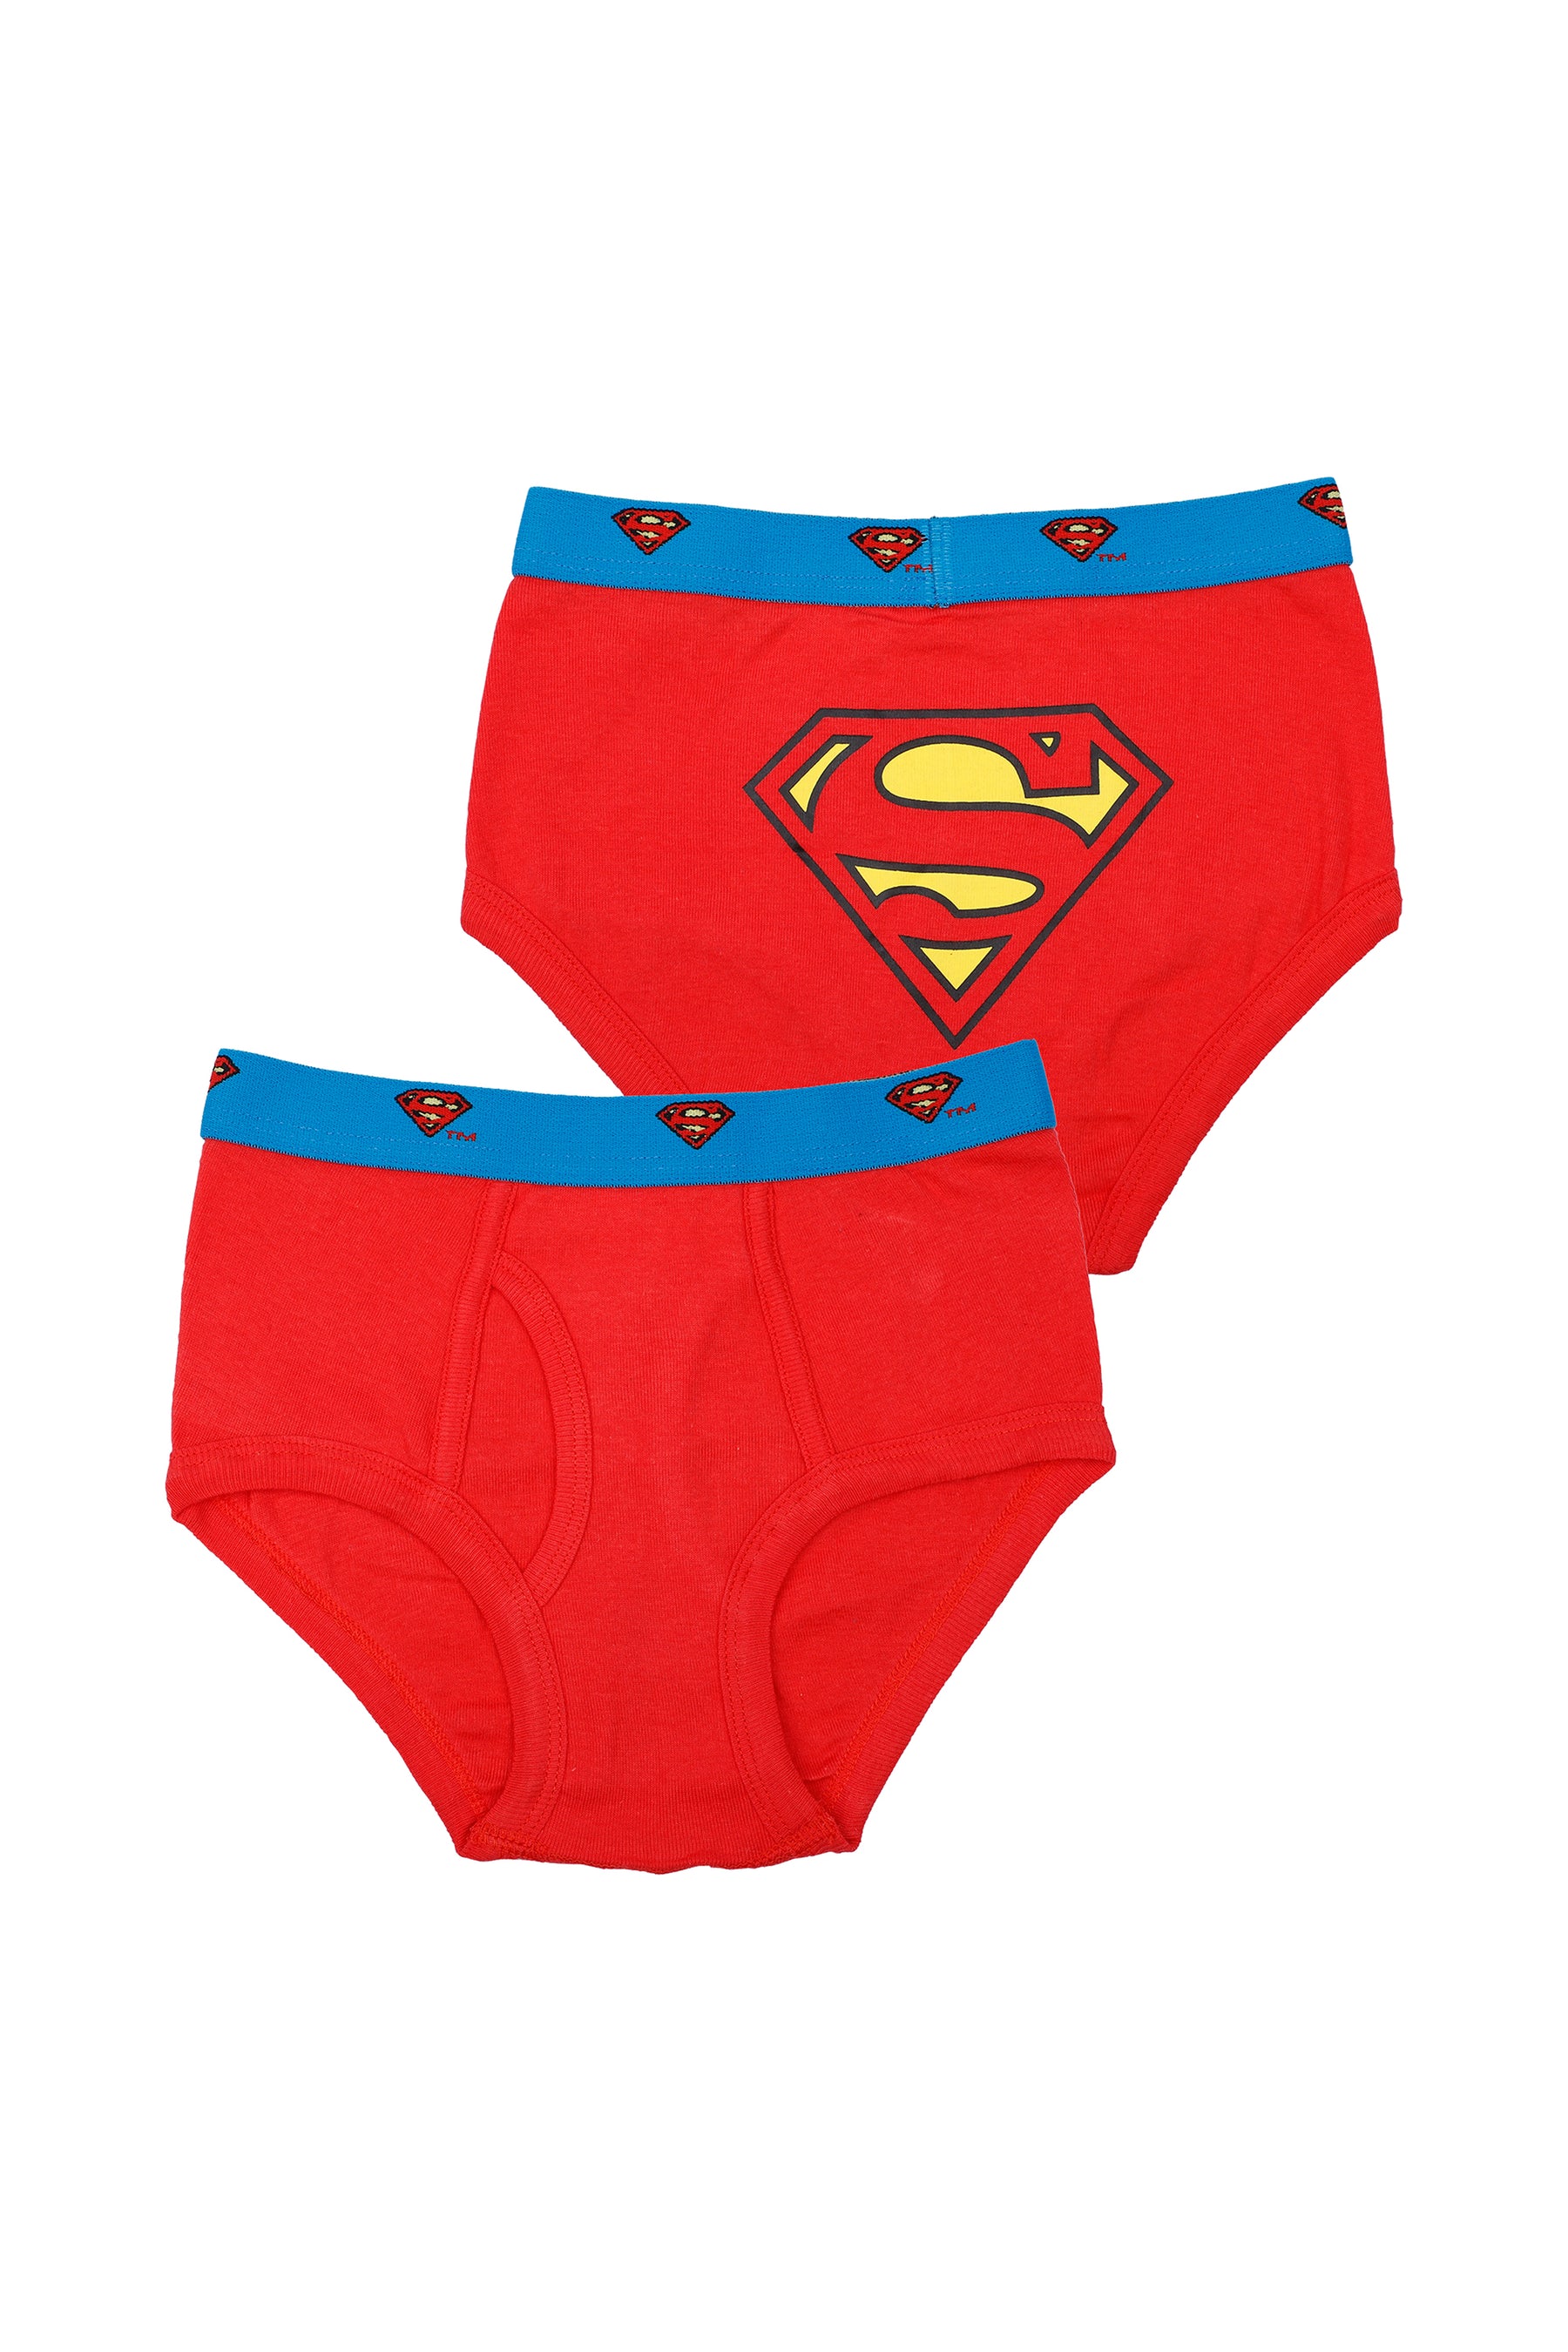 DC Comics Superman Boy's Shirt/Underoos Underoos Set